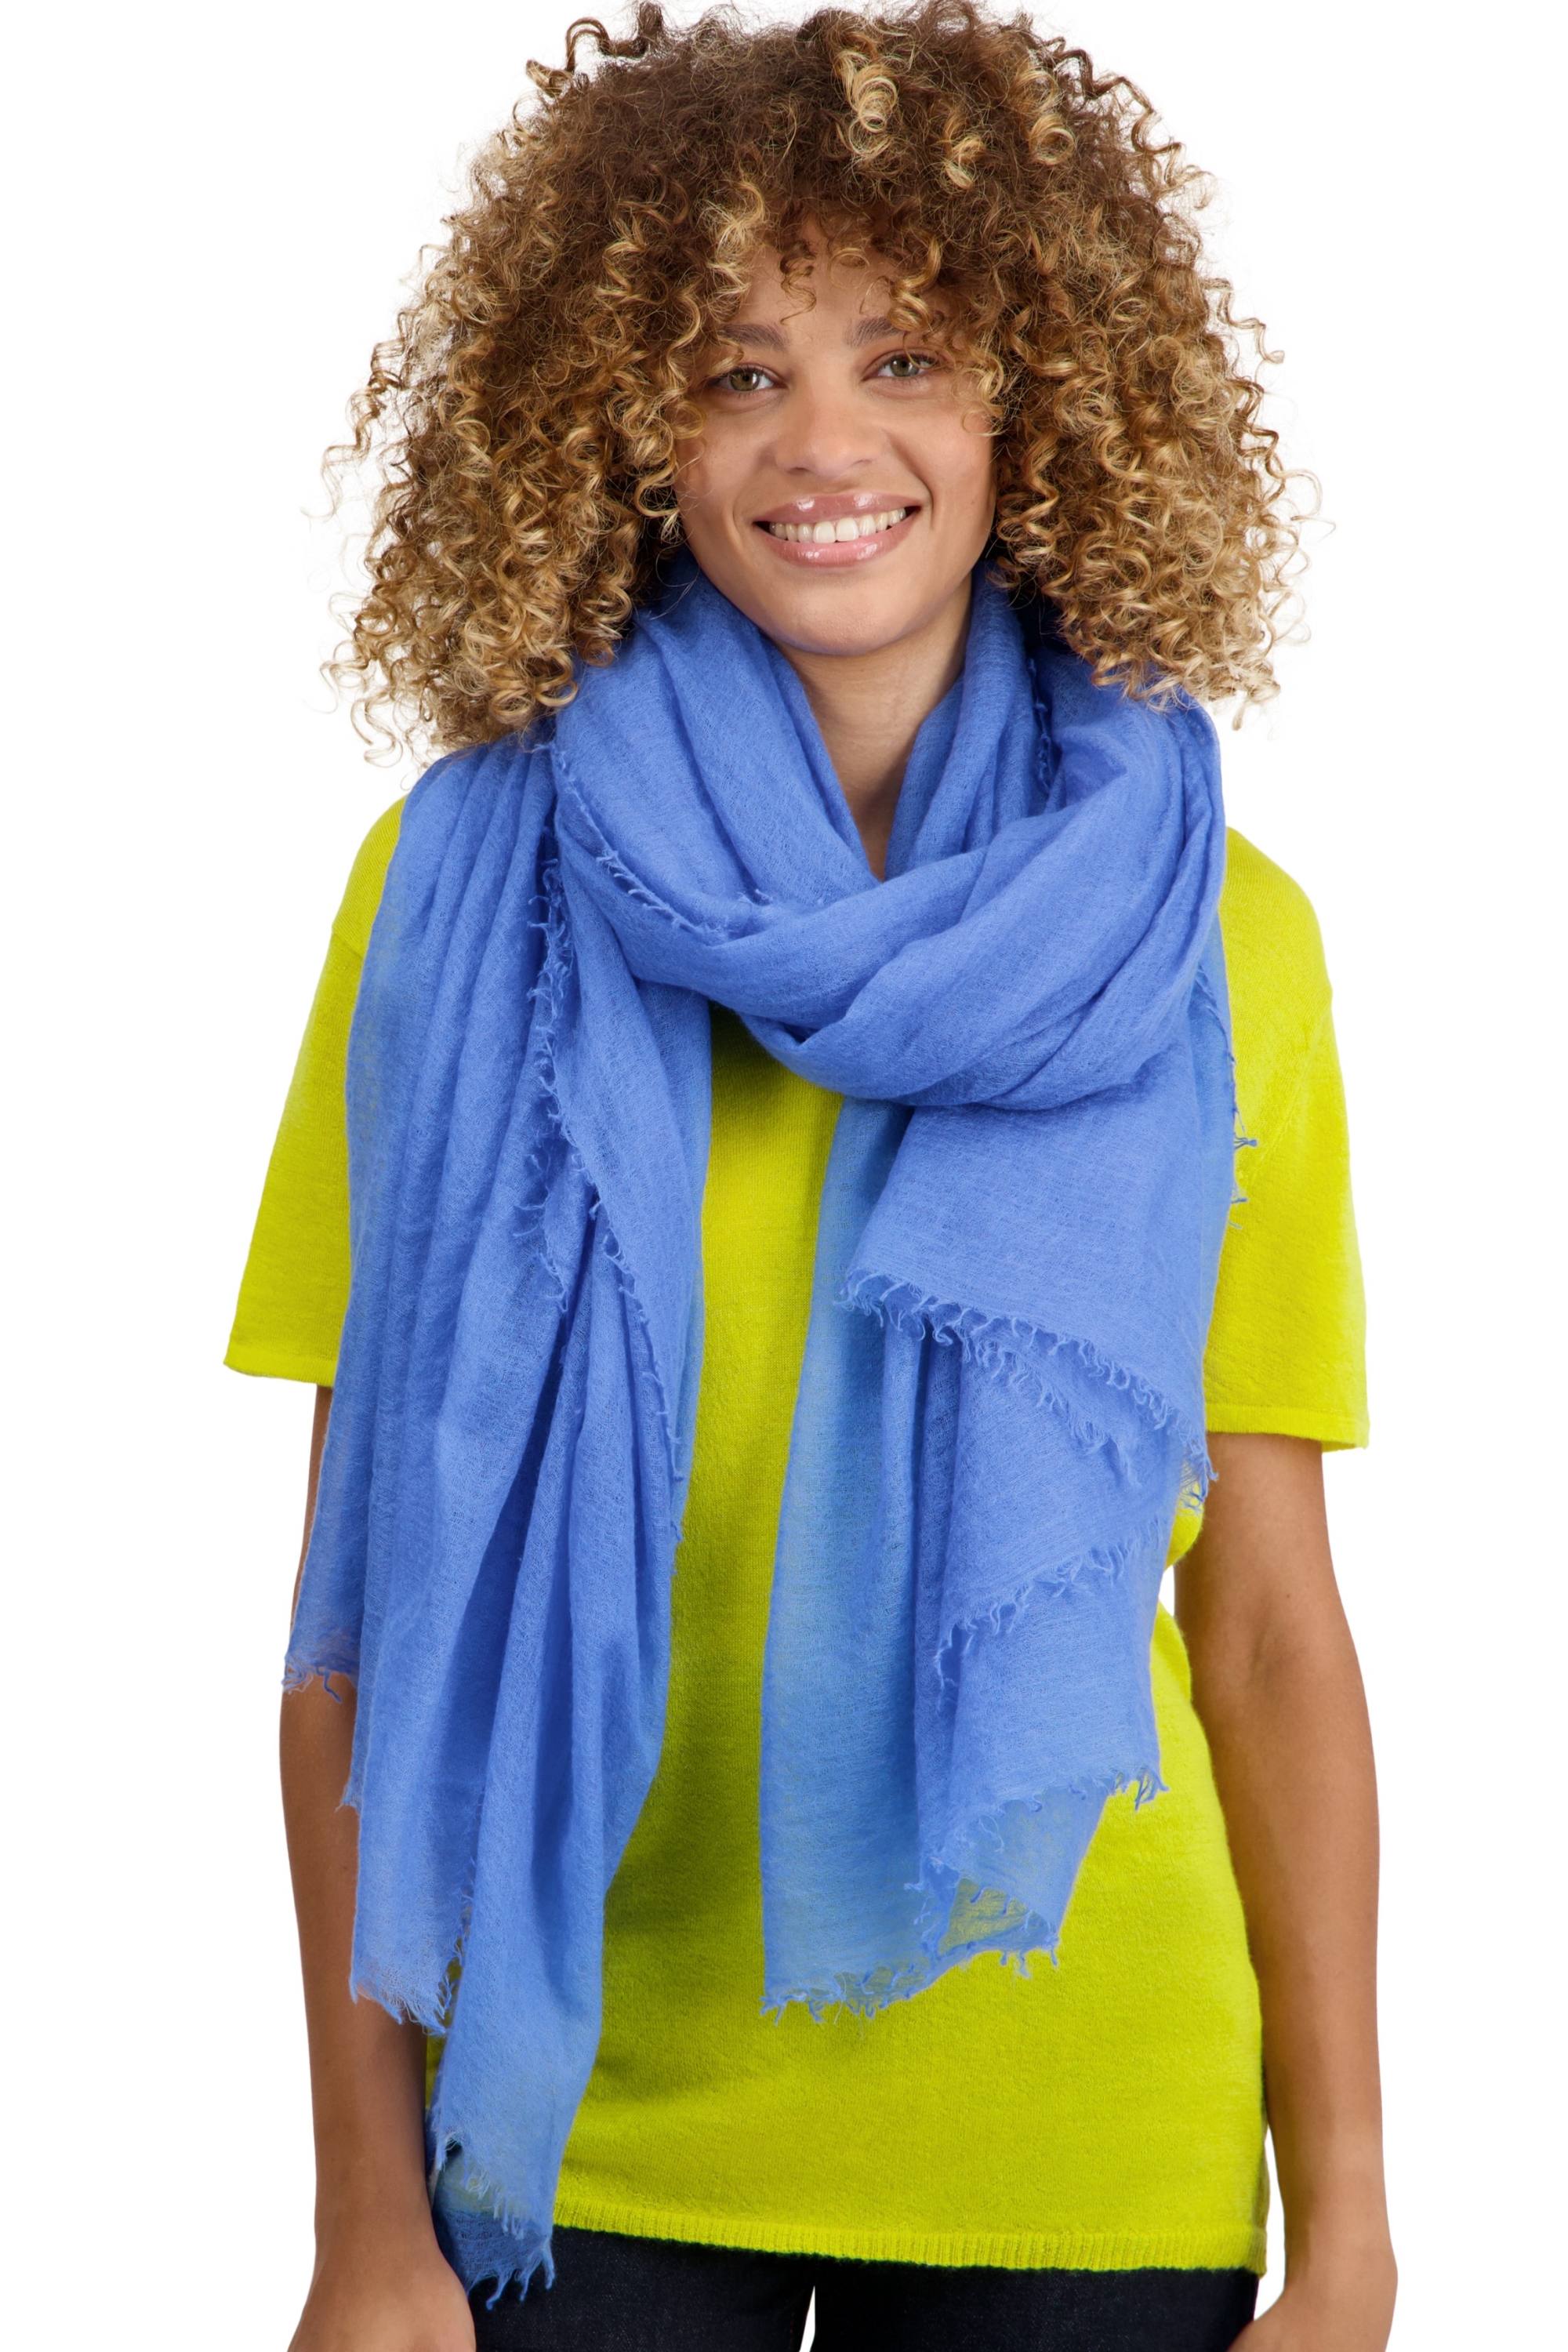 Cashmere ladies scarves mufflers tonka light cobalt blue 200 cm x 120 cm